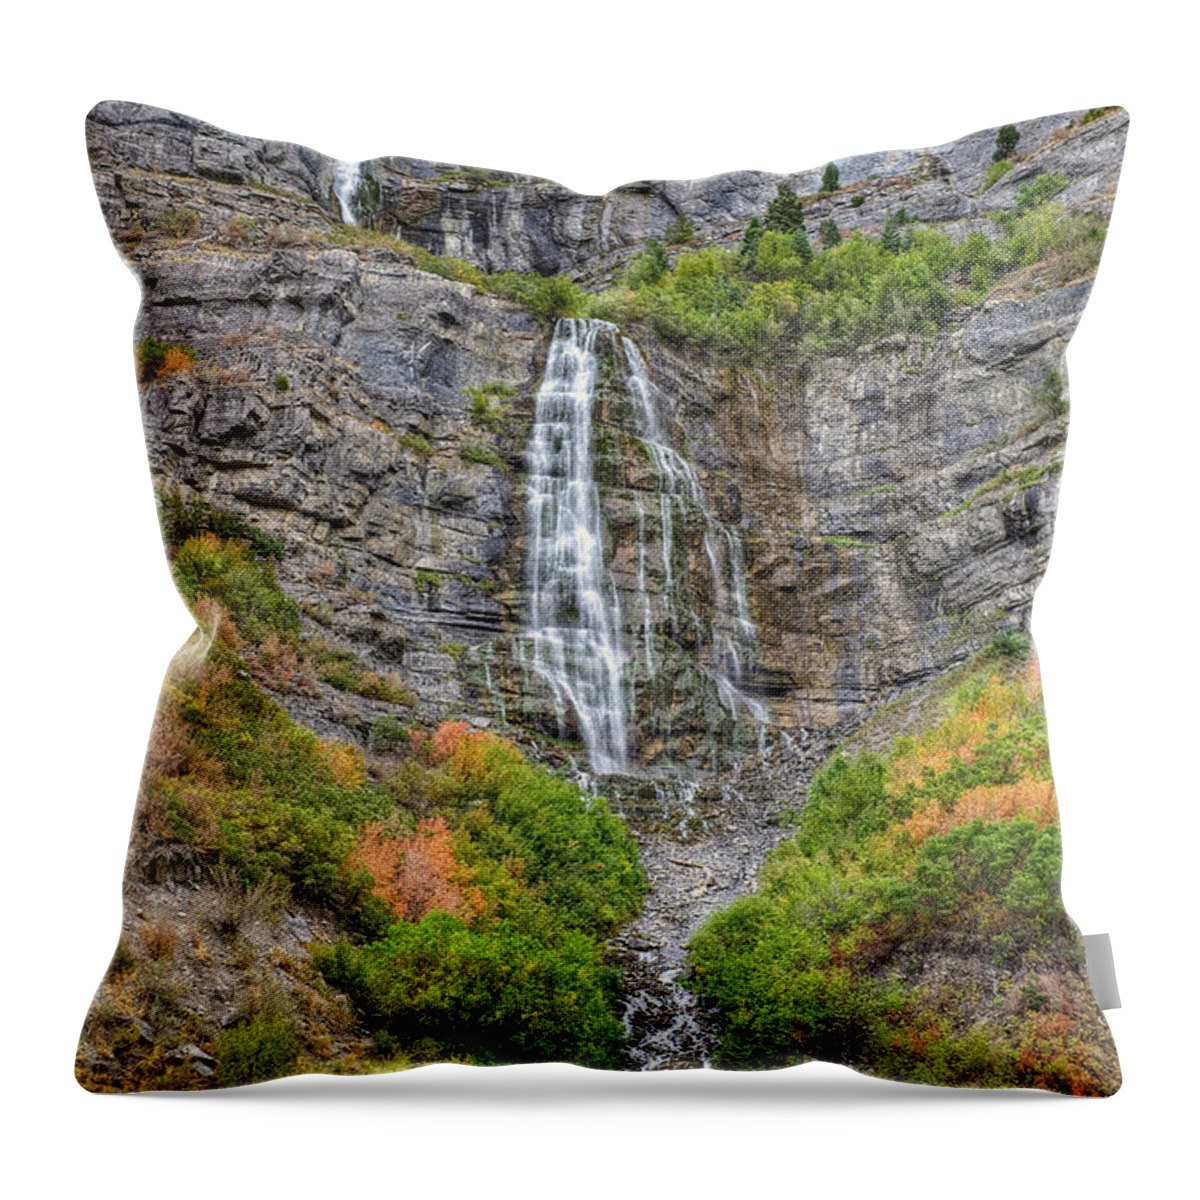 Landscape Throw Pillow featuring the photograph Bridal Veil Falls #1 by Brett Engle